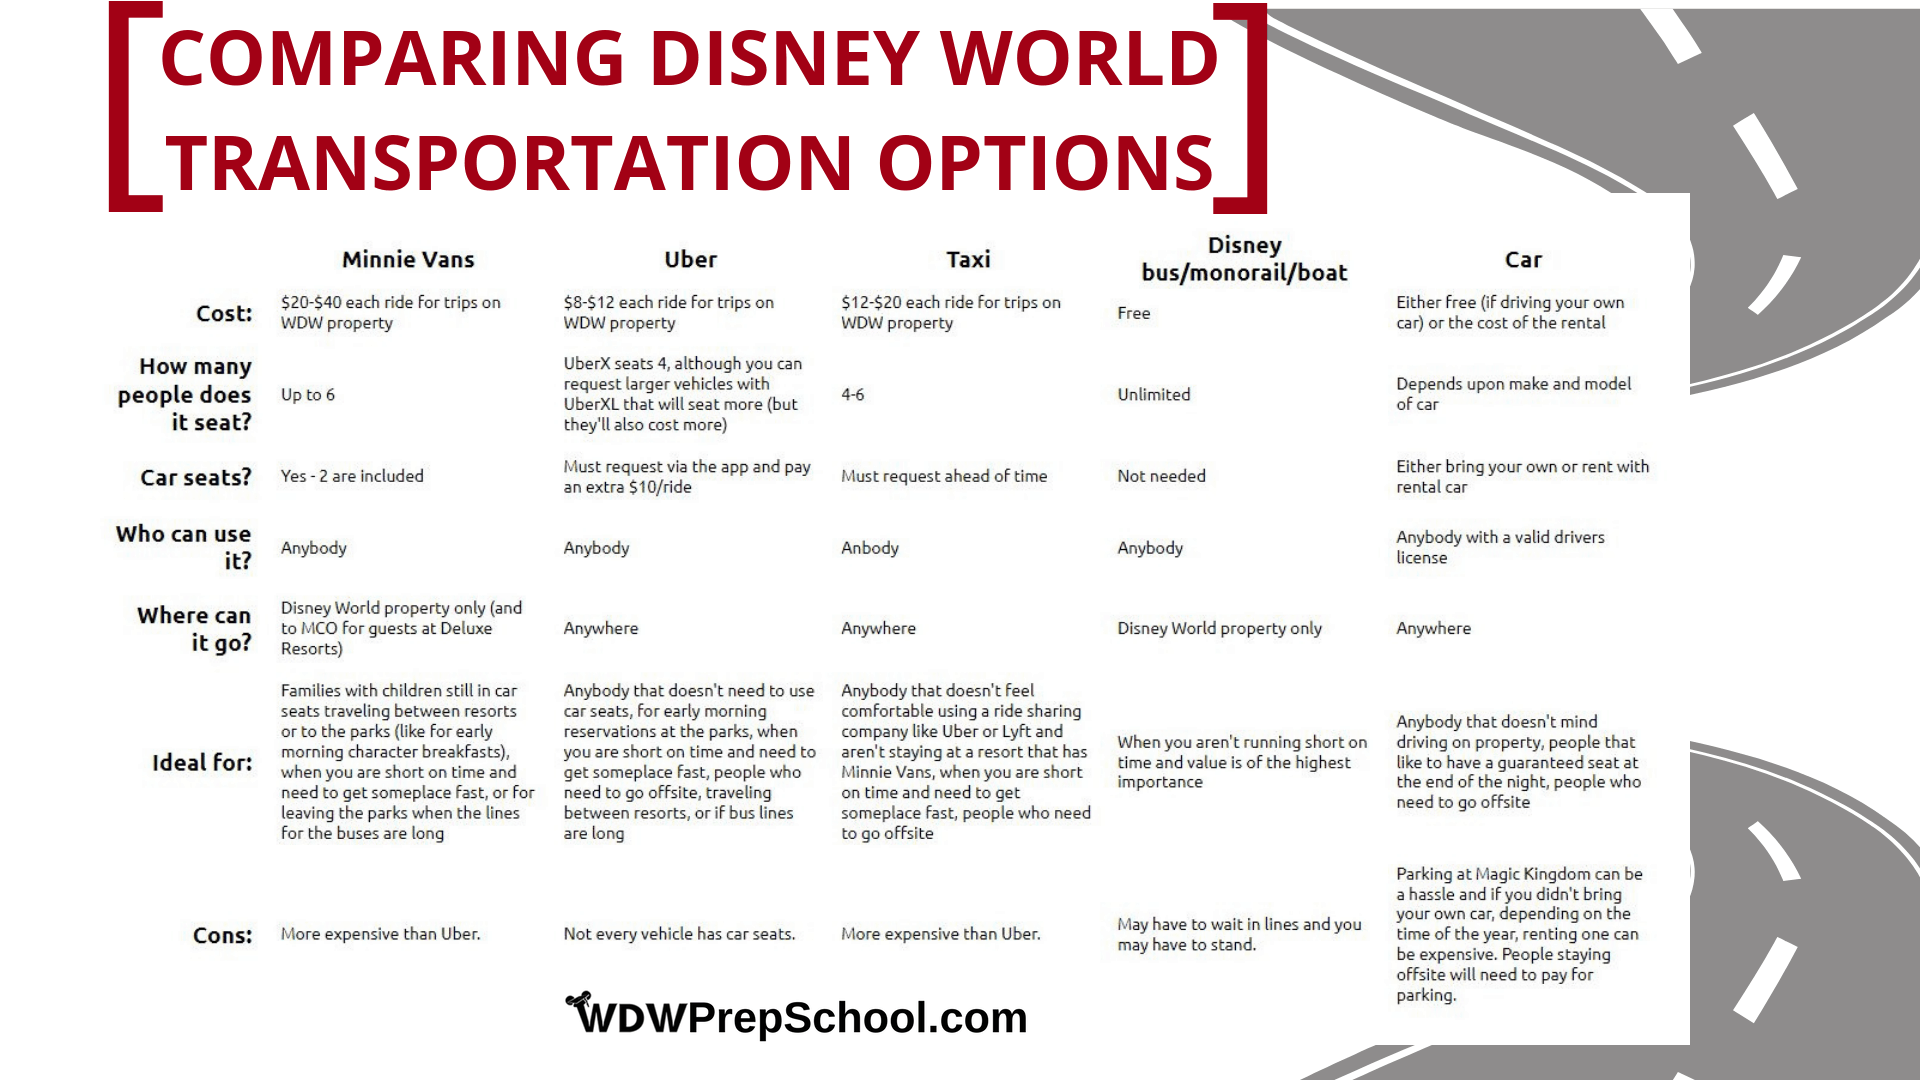 Comparing Disney World transportation options